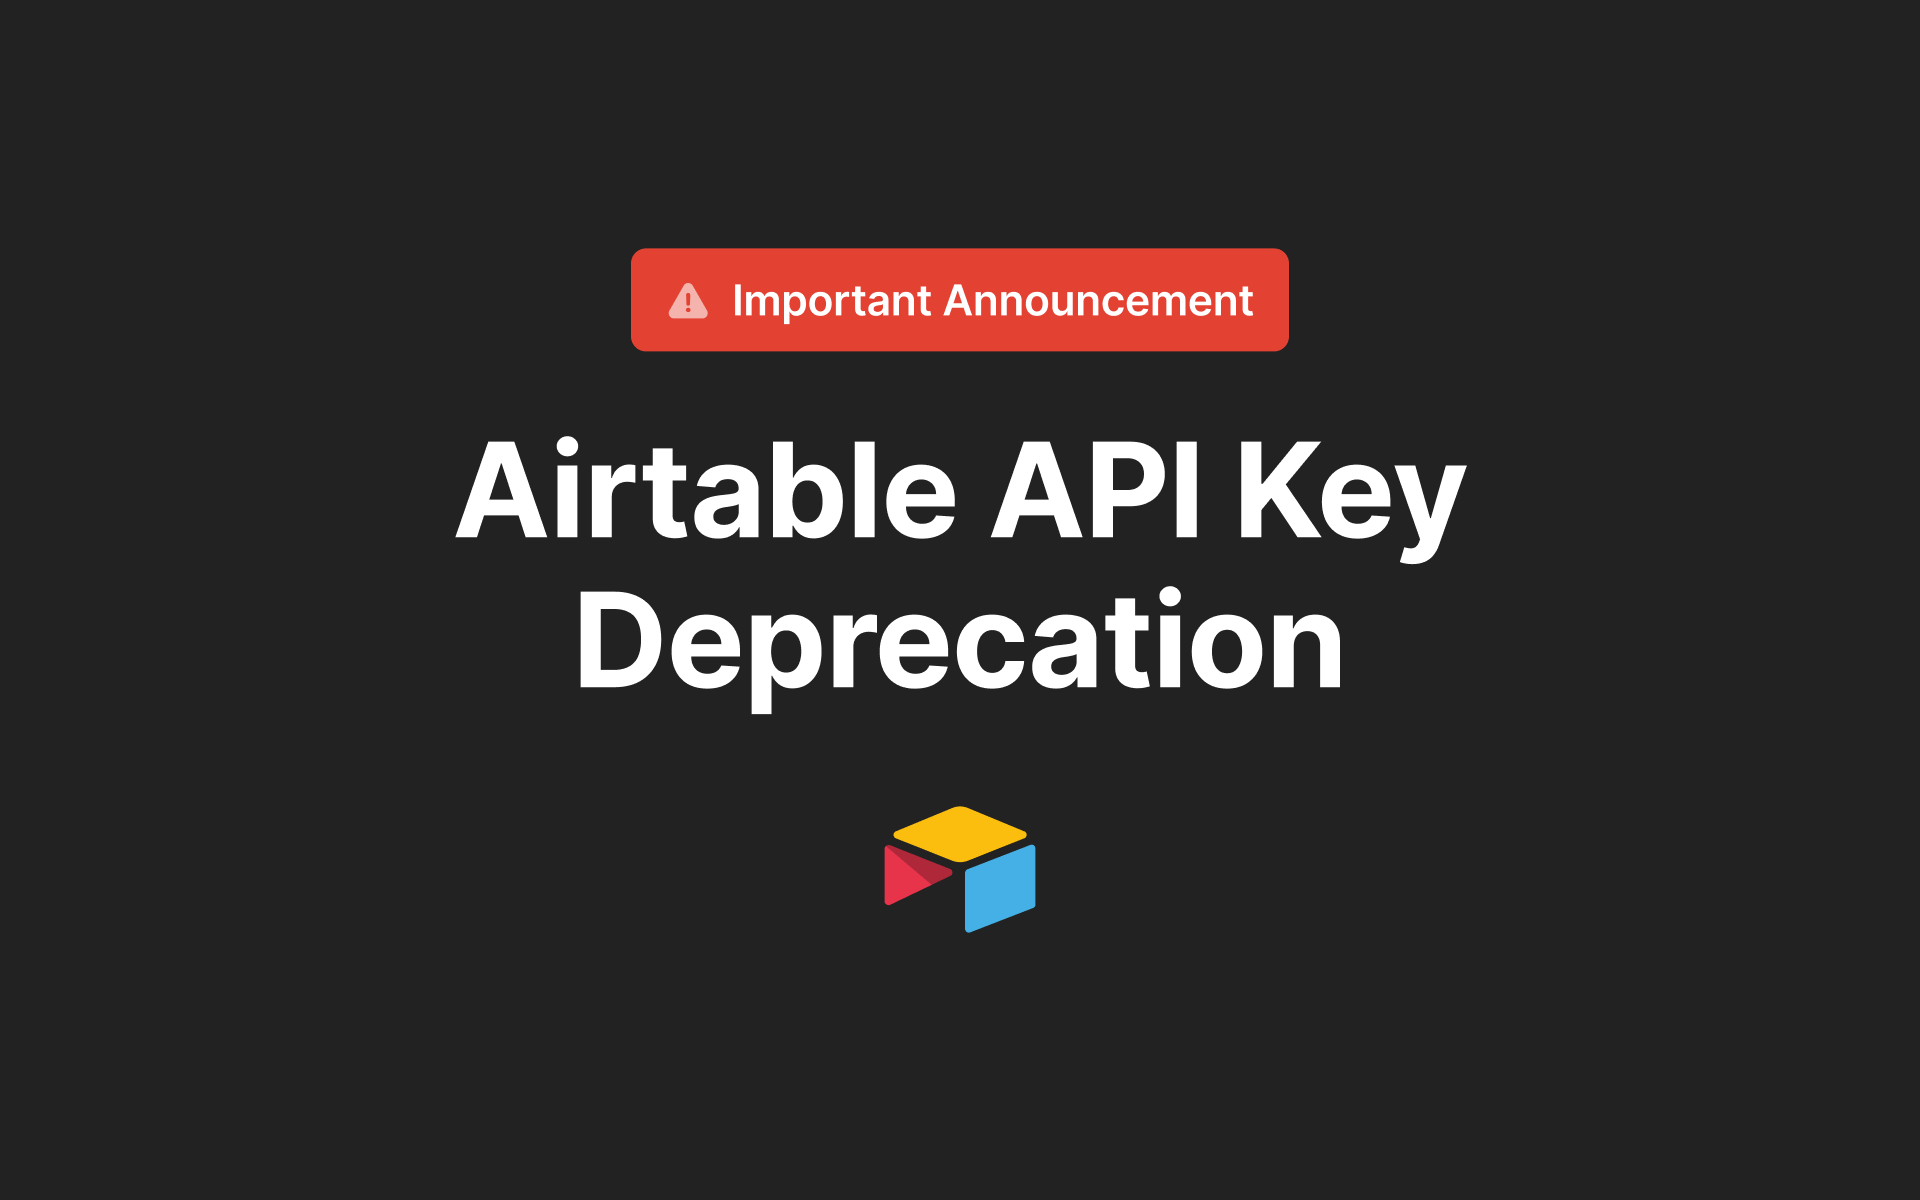 Airtable API Key deprecation